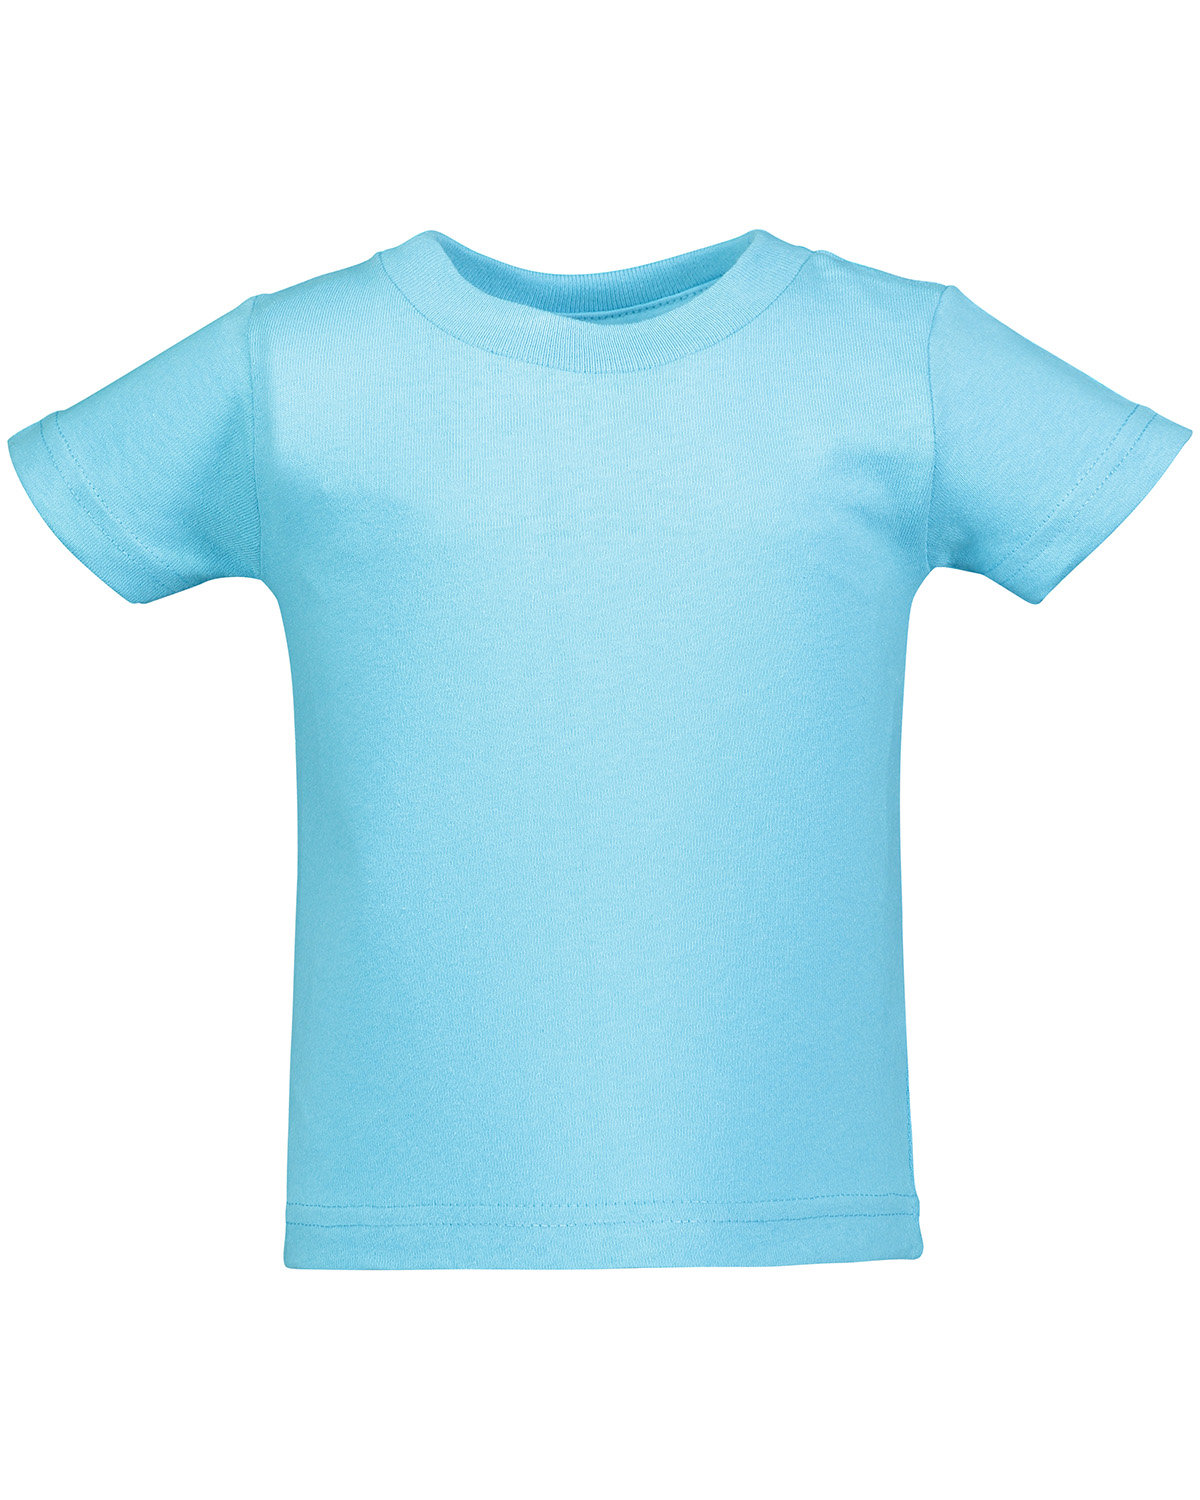 Rabbit Skins Infant Cotton Jersey T-Shirt AQUA 